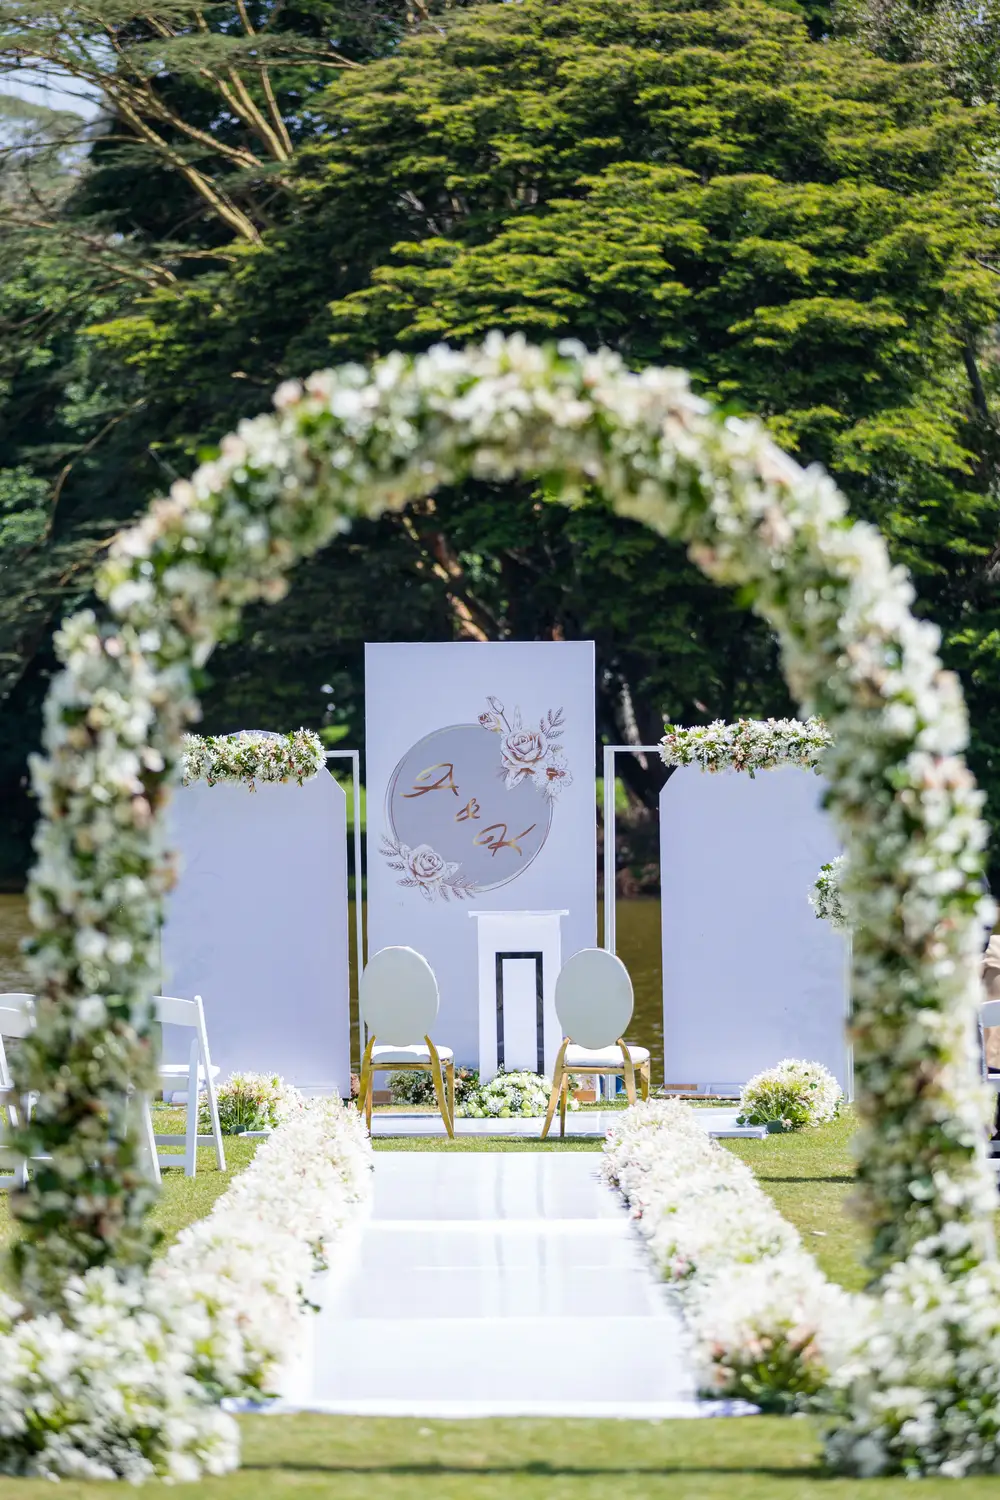 Wedding arc endowed with flowers